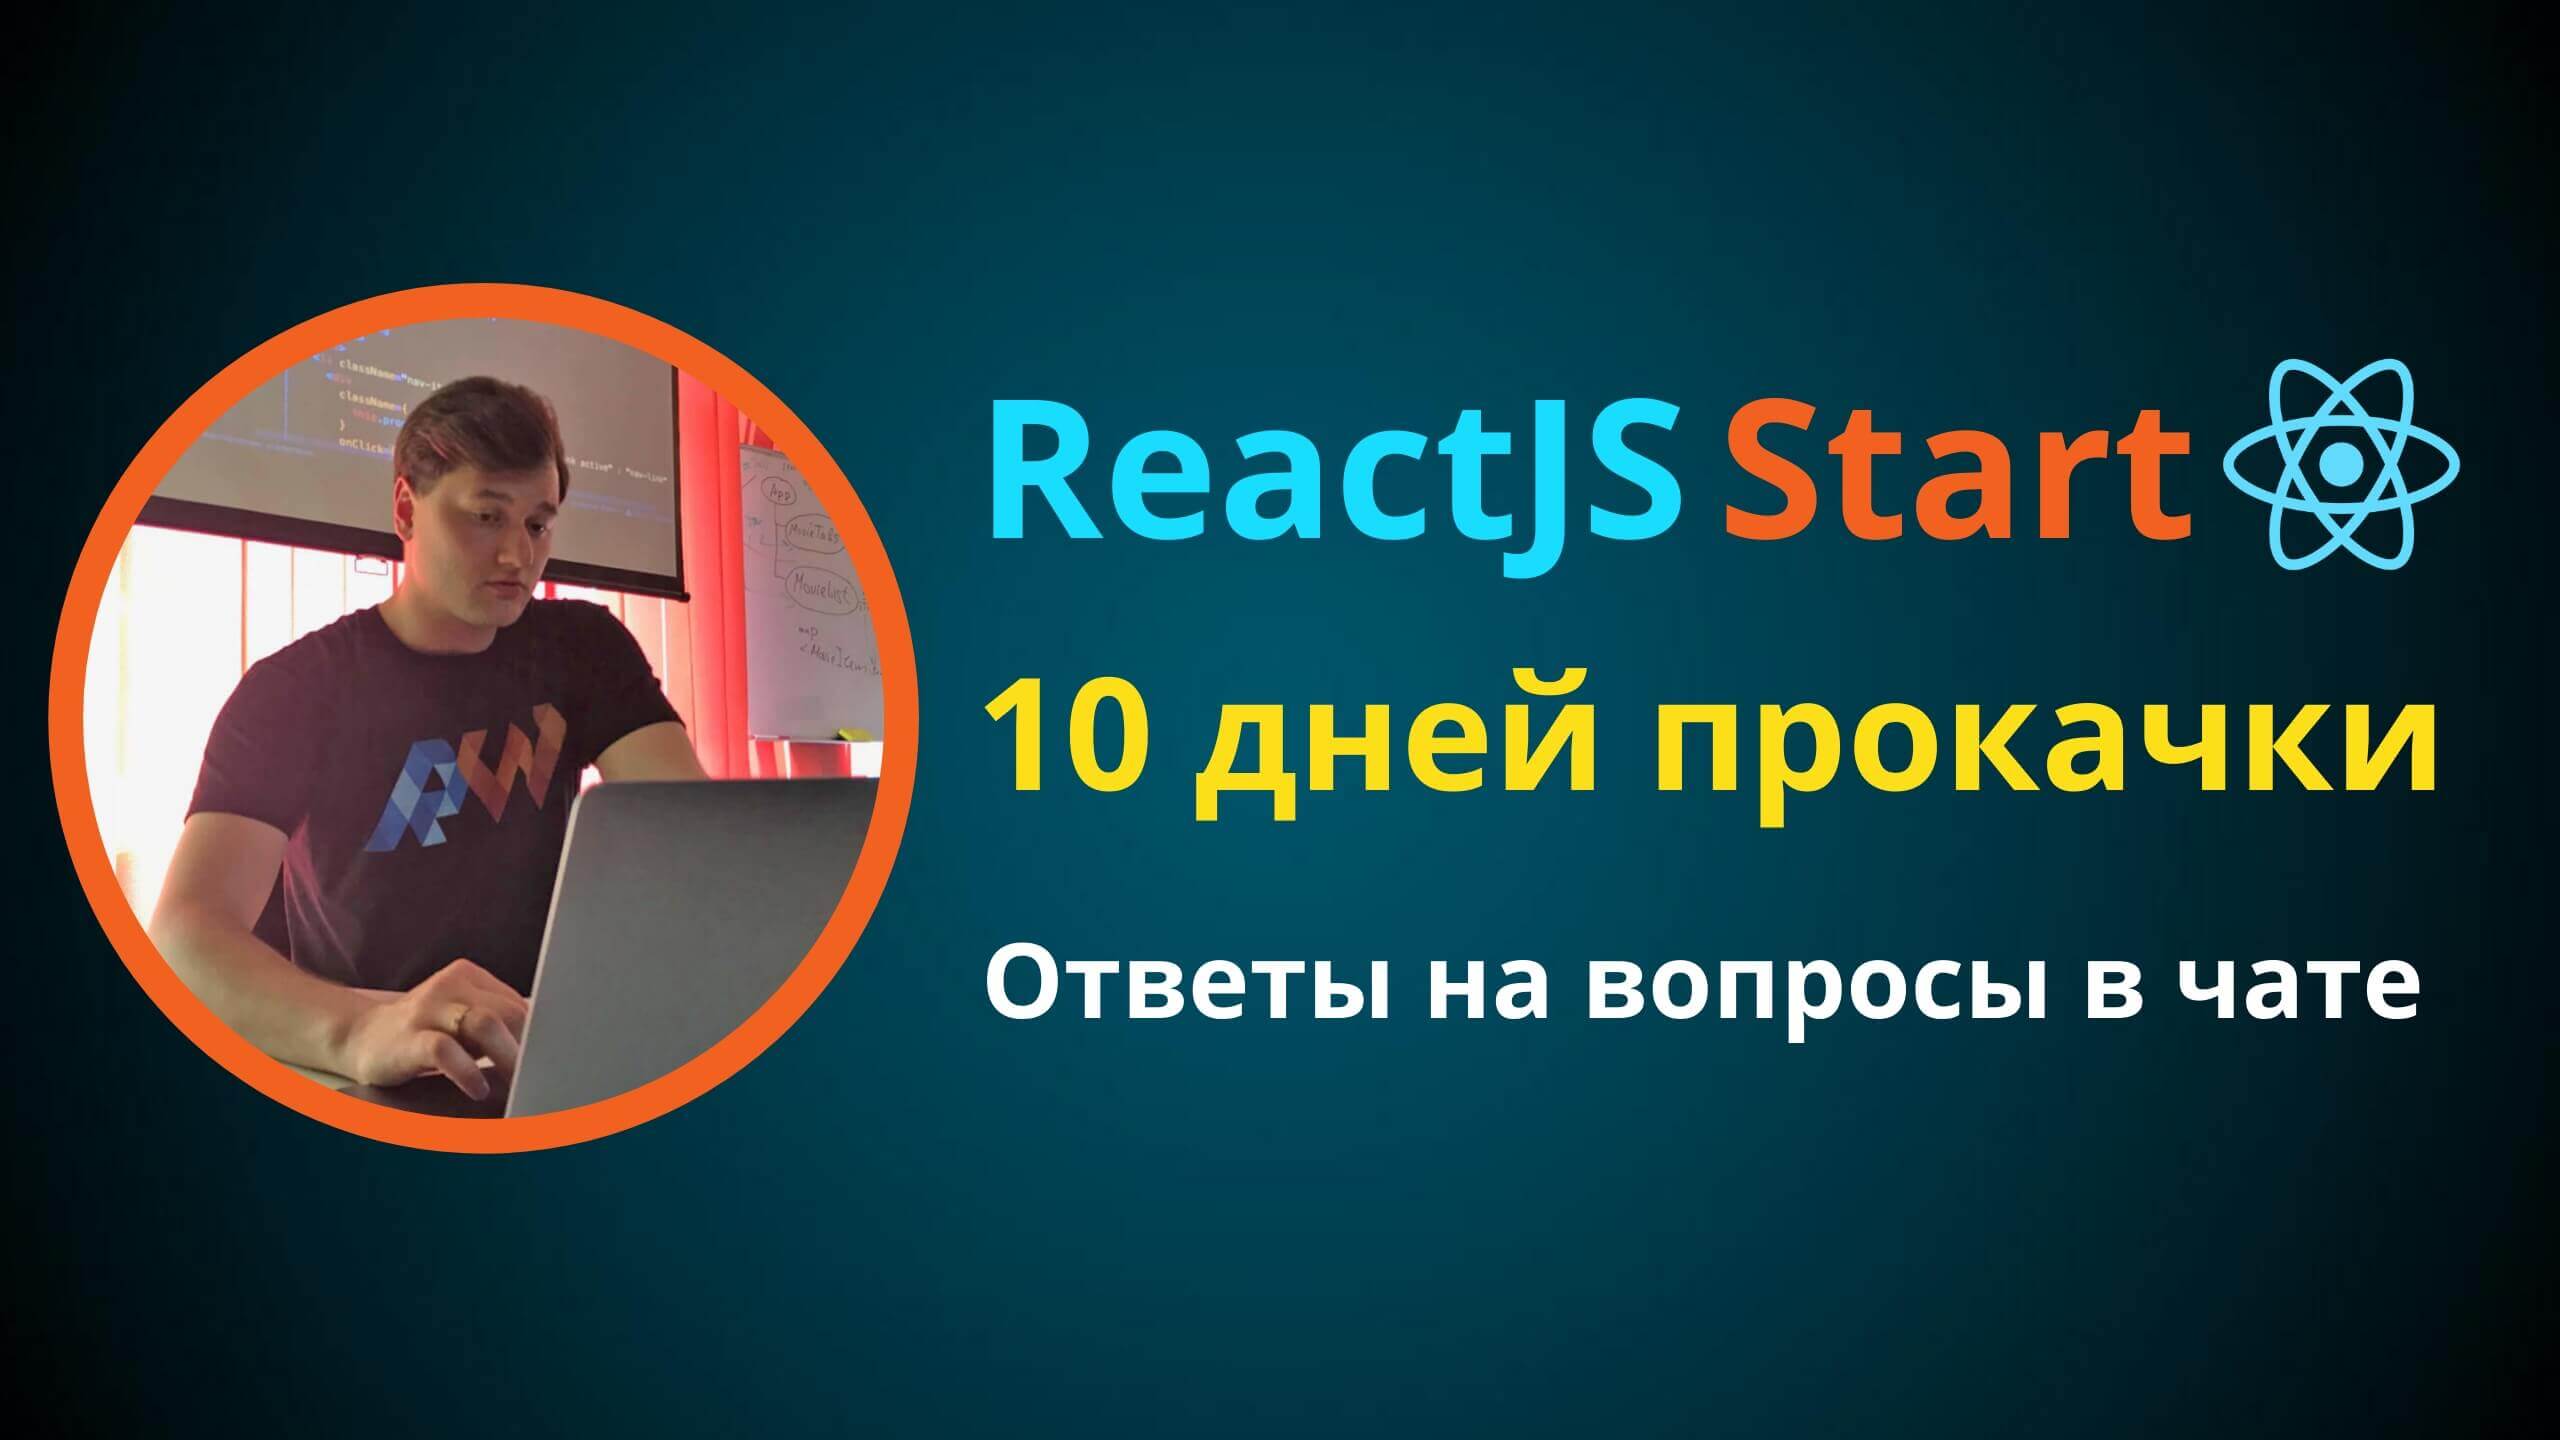 ReactJS Start. 10 дней прокачки